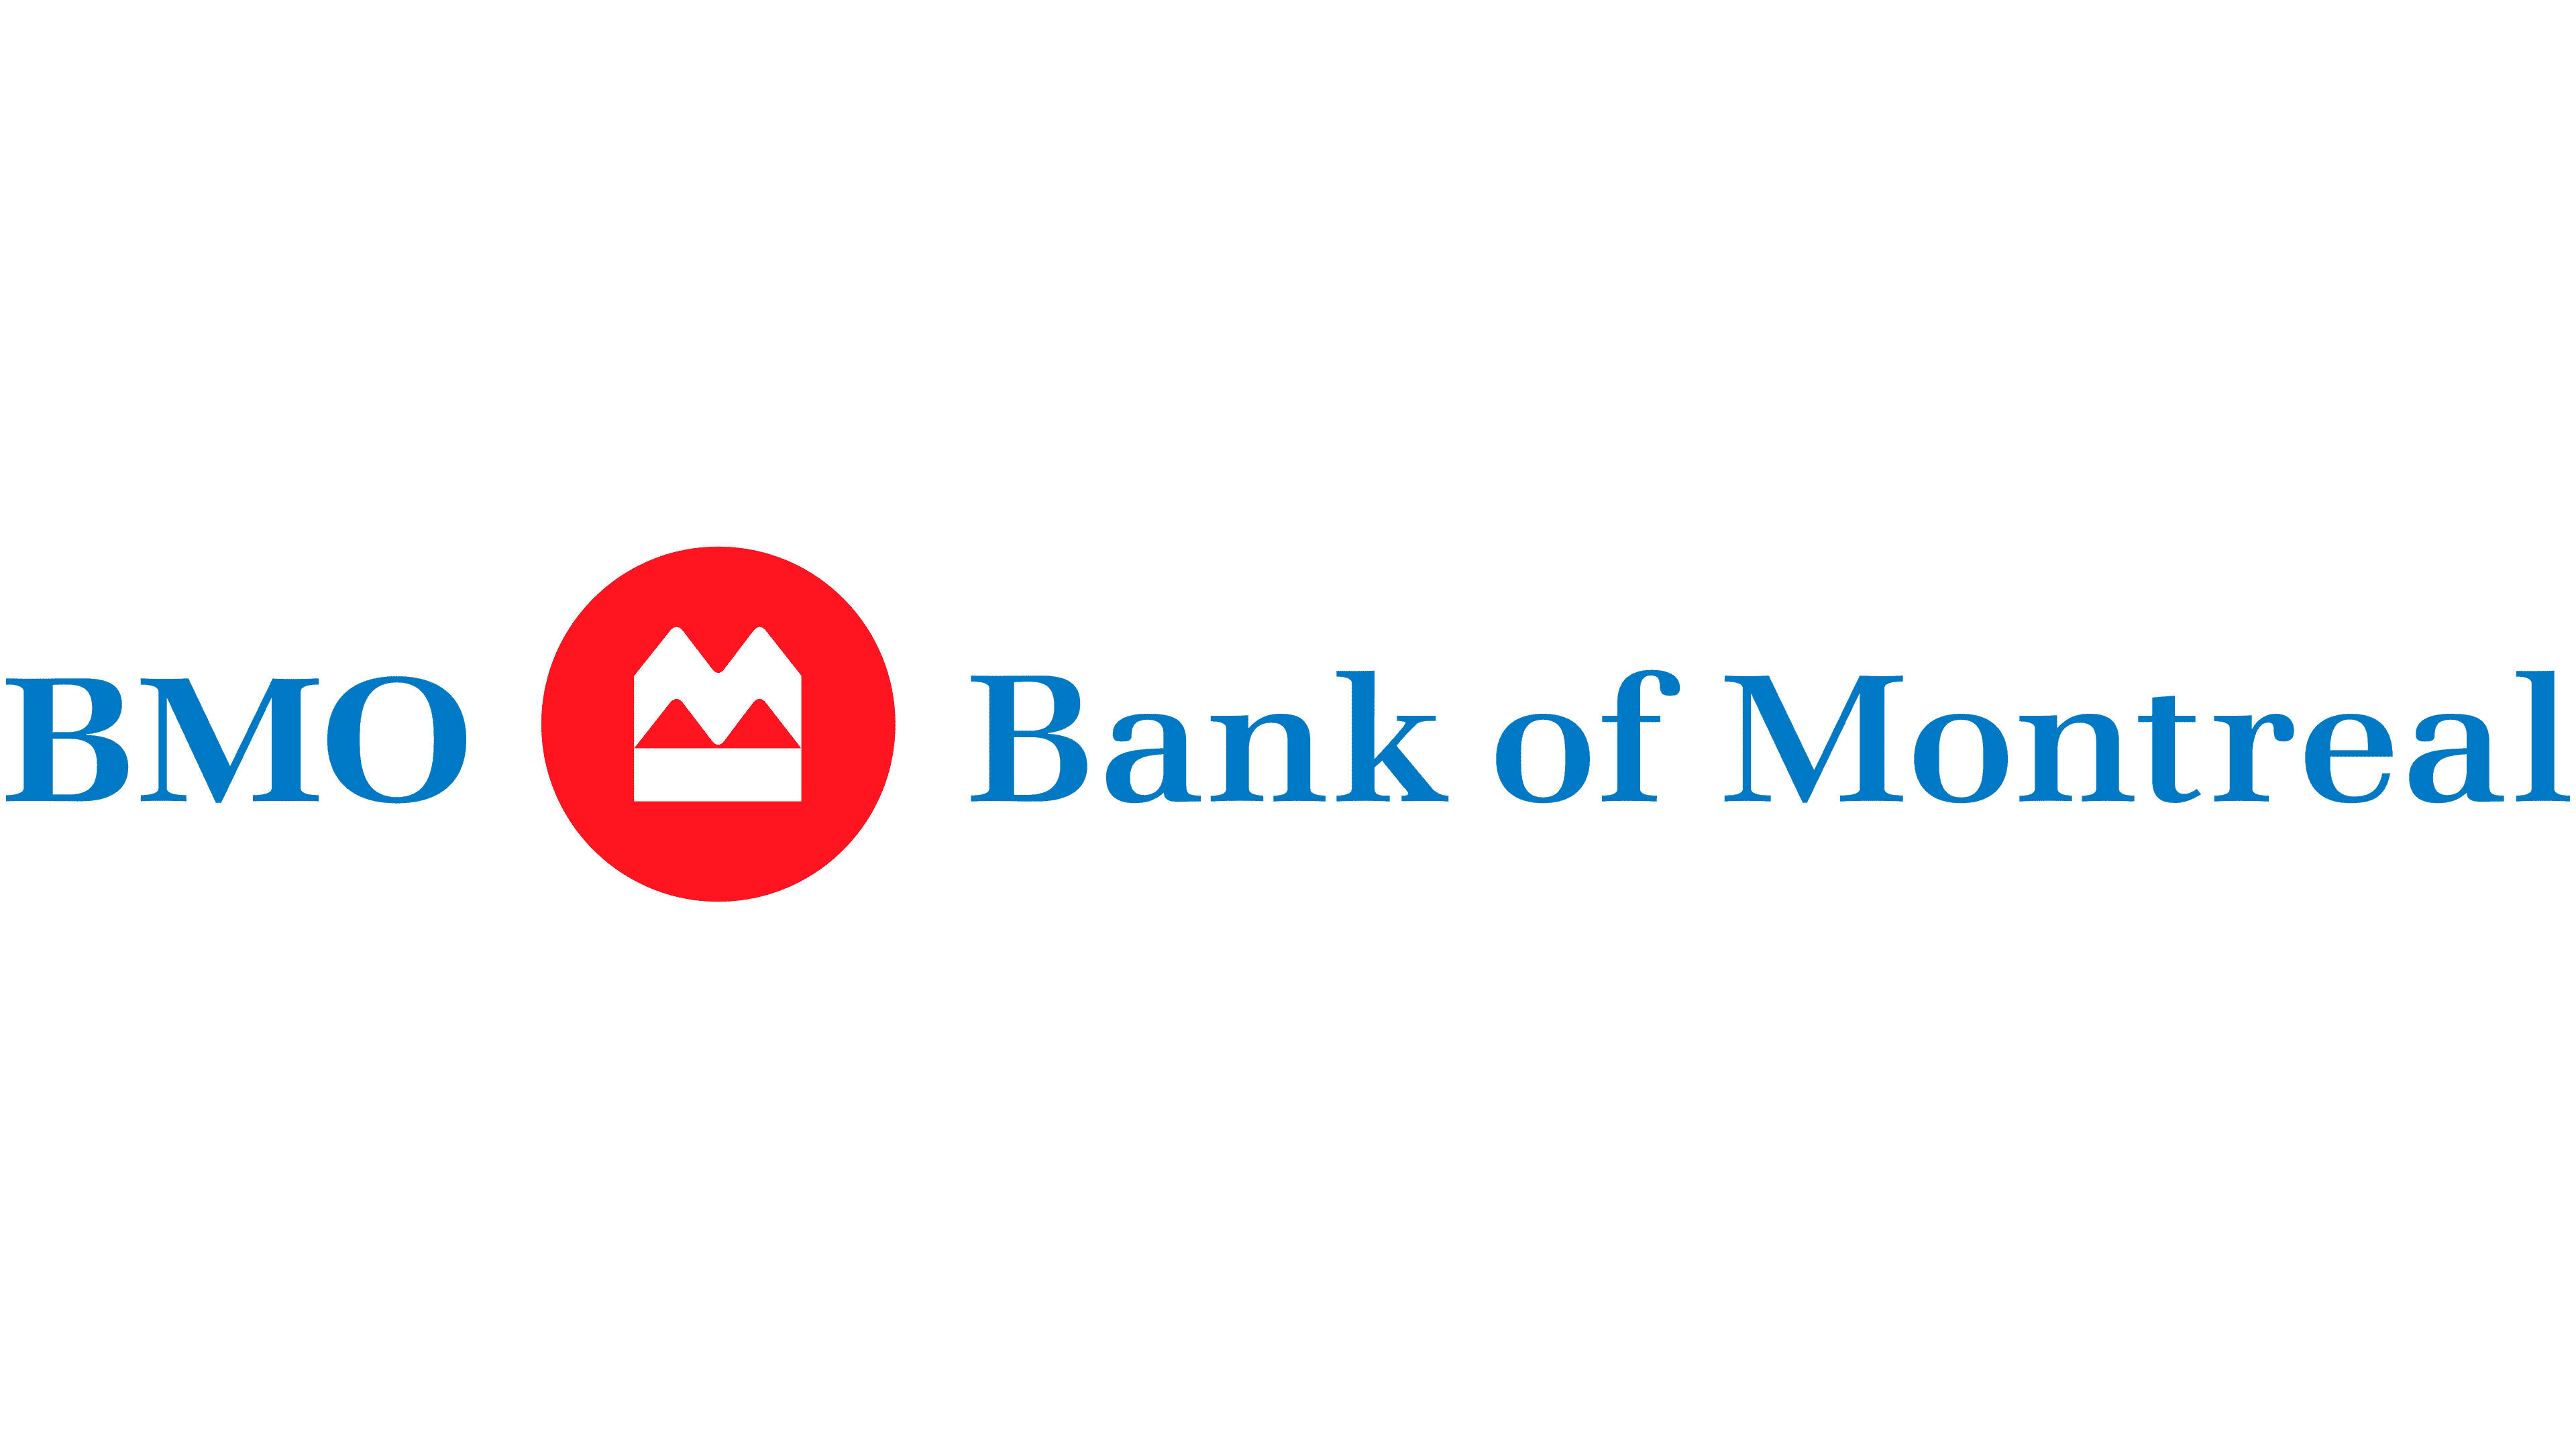 https://civmin.utoronto.ca/wp-content/uploads/2023/01/Bank-of-Montreal-logo.png